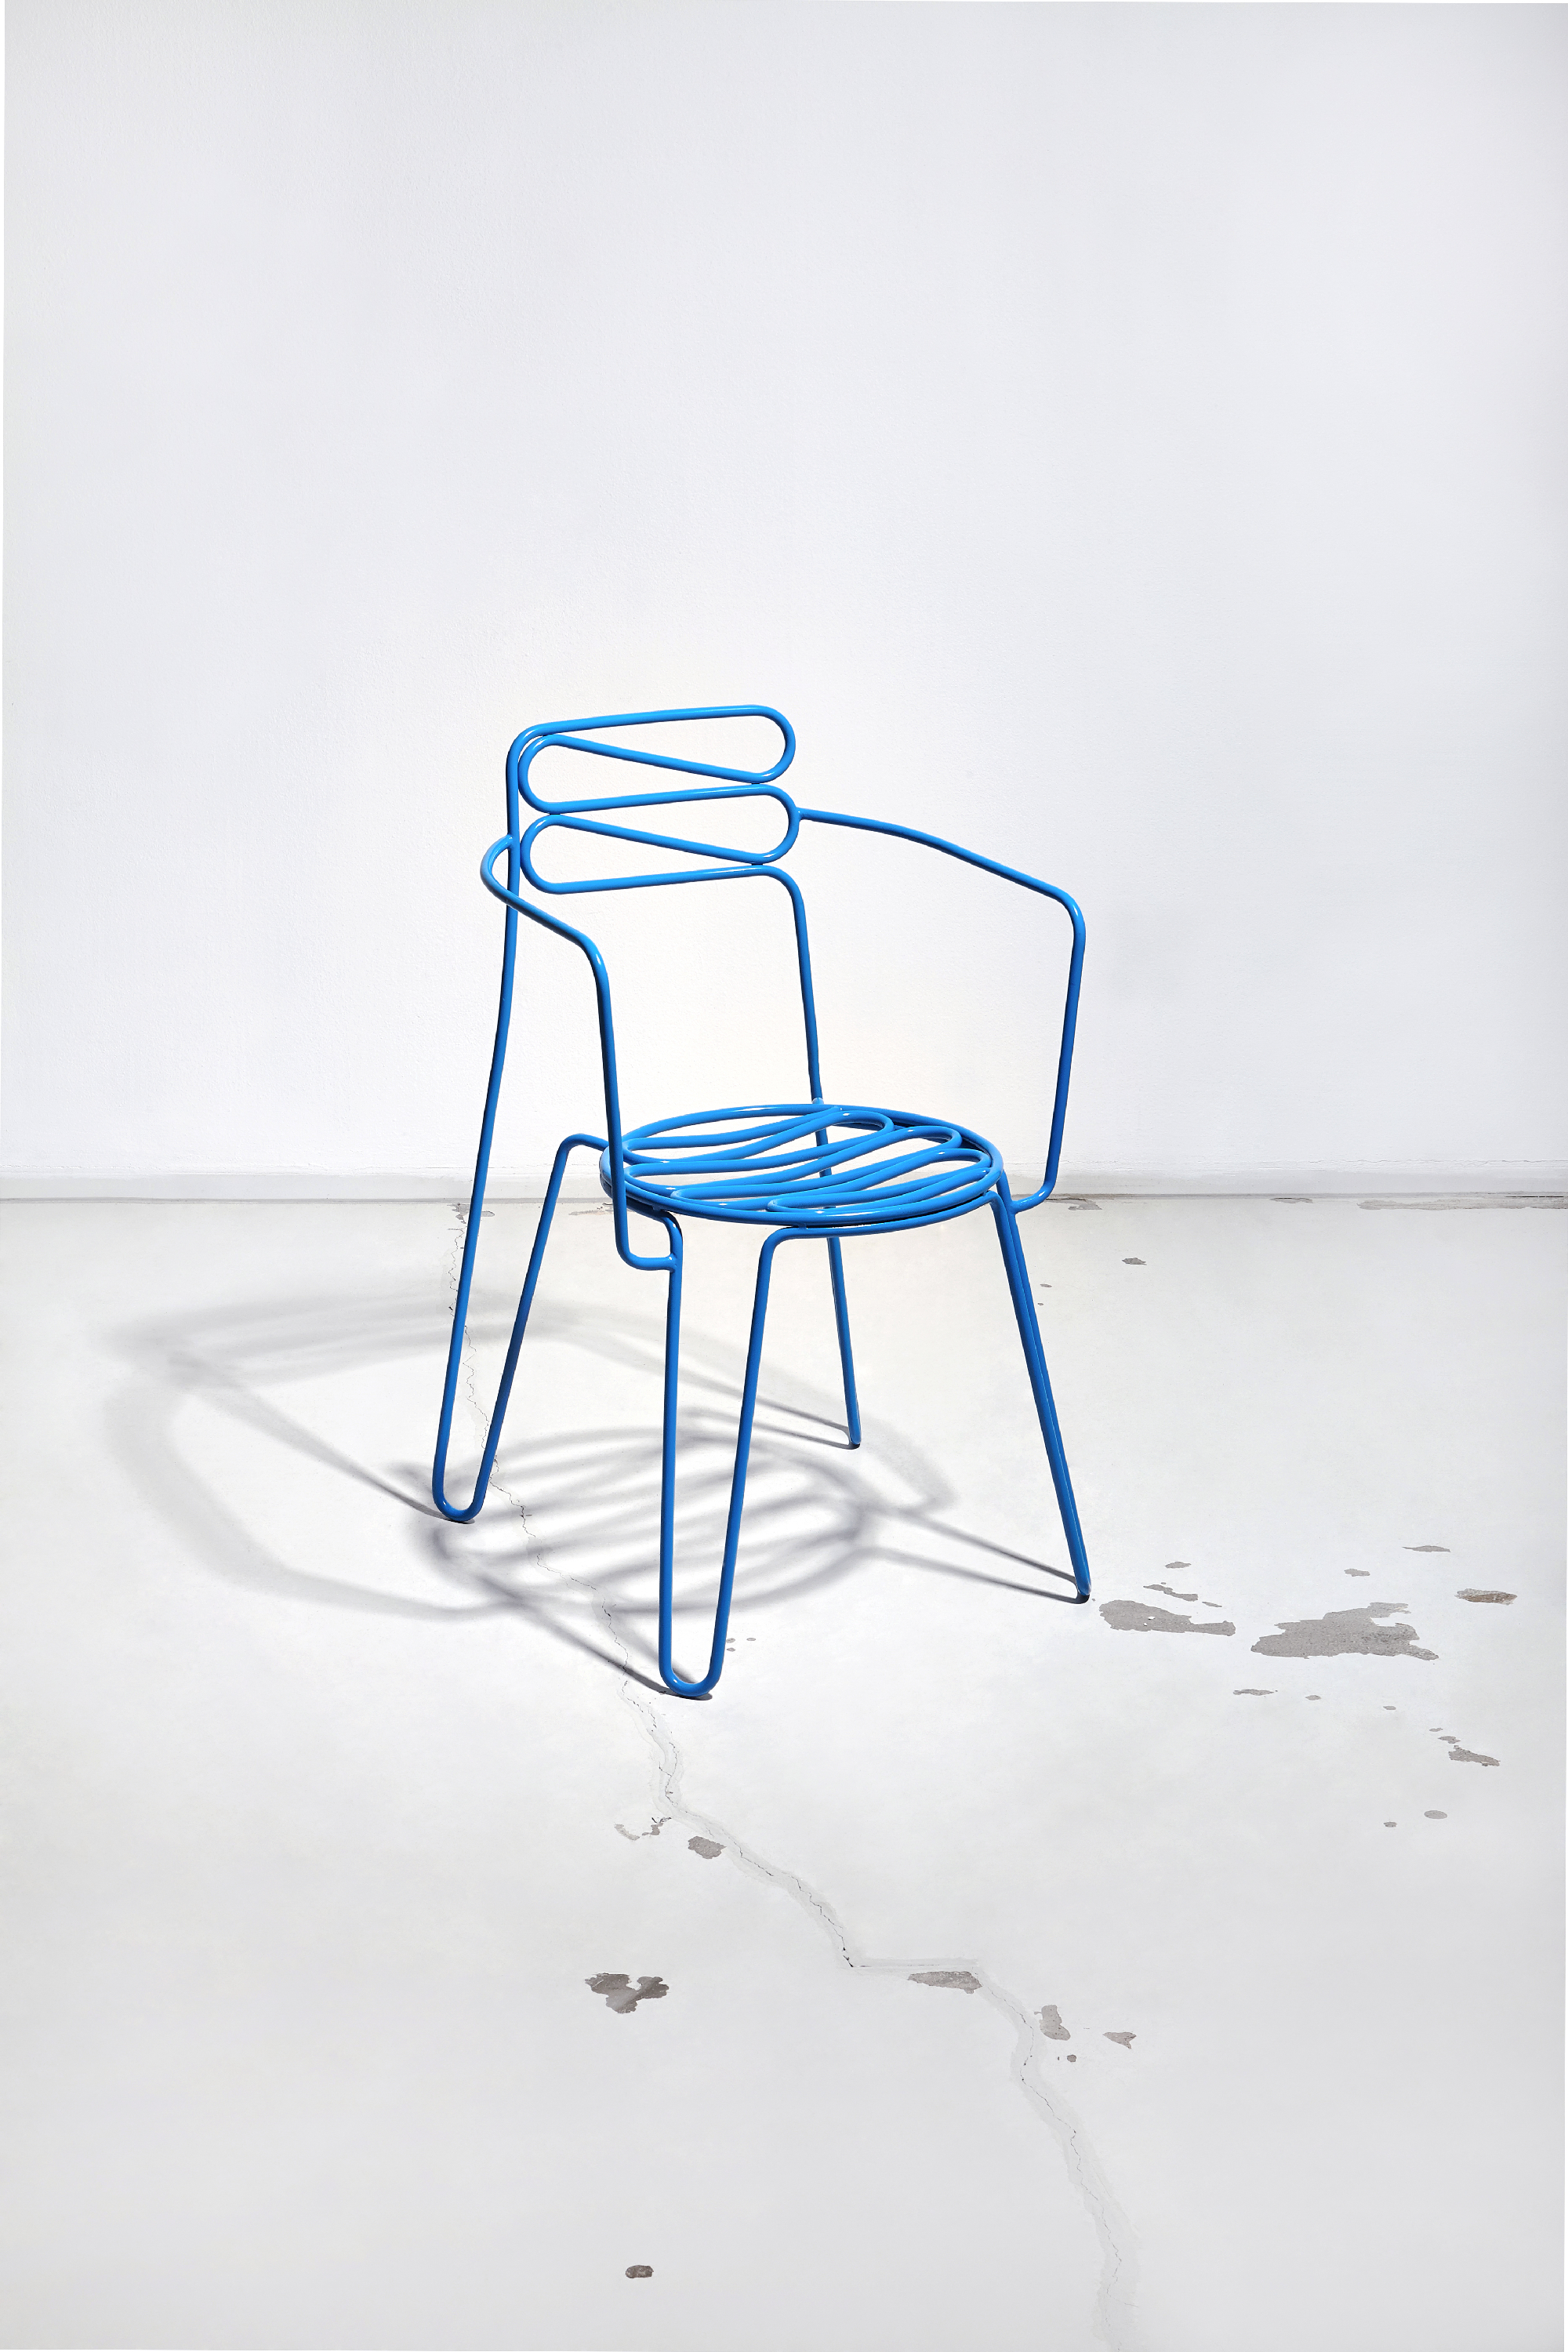 Maria-Jeglinska_The-Little-Black_armchair_©Turczynska-for-Culture-PL_Designalive04